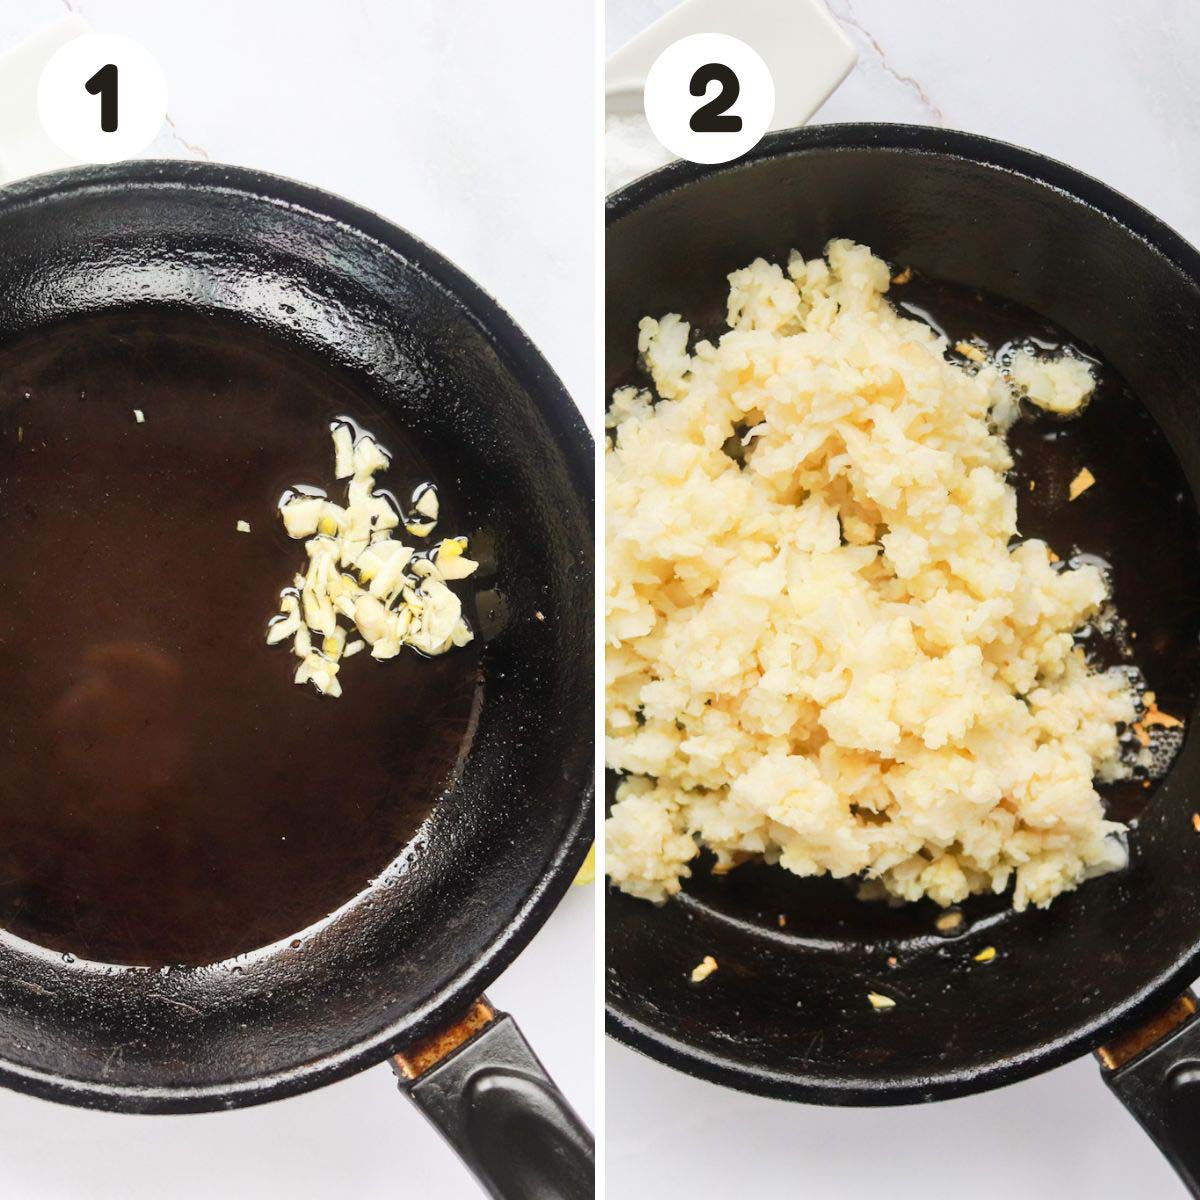 Steps to make the cauliflower rice.